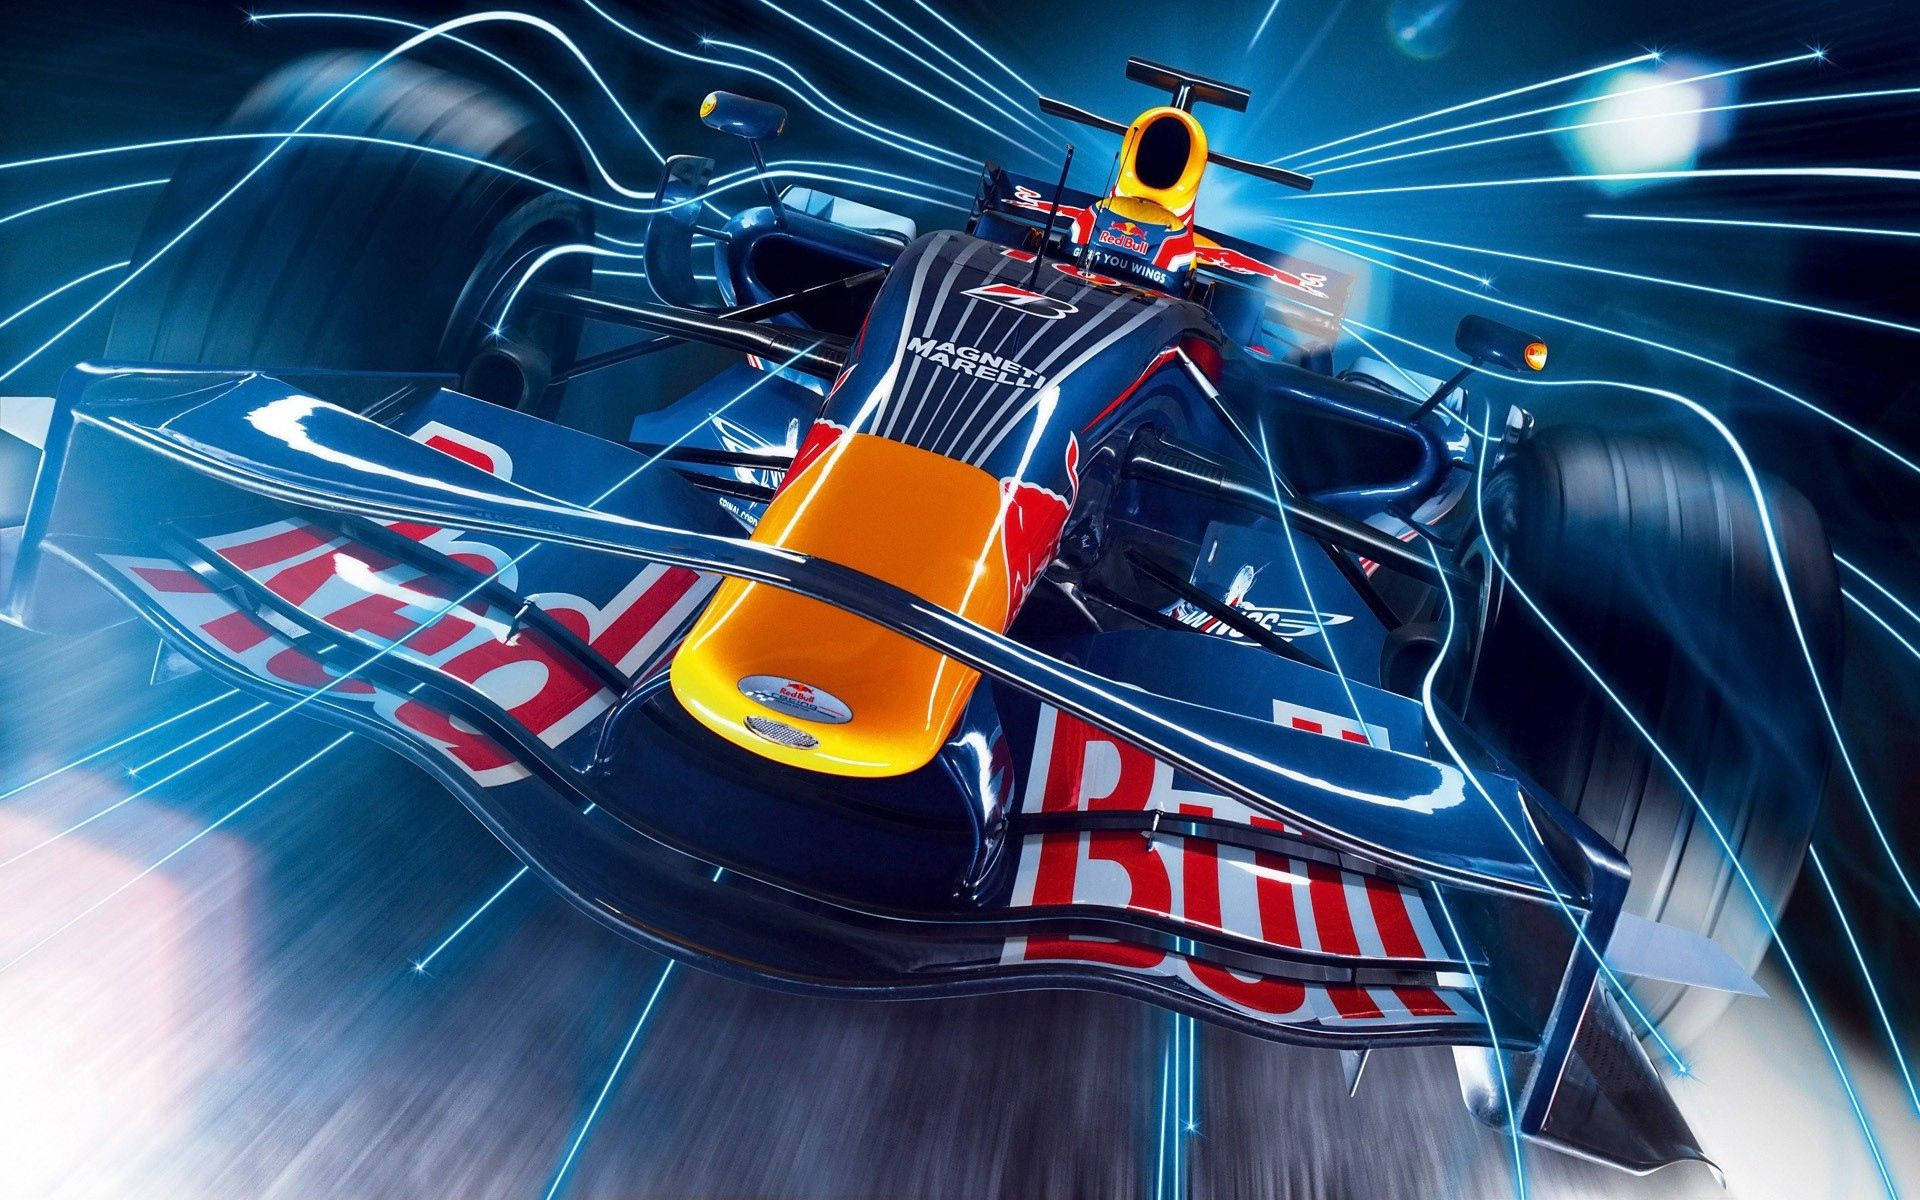 Dynamic Energy - Red Bull In Action Wallpaper